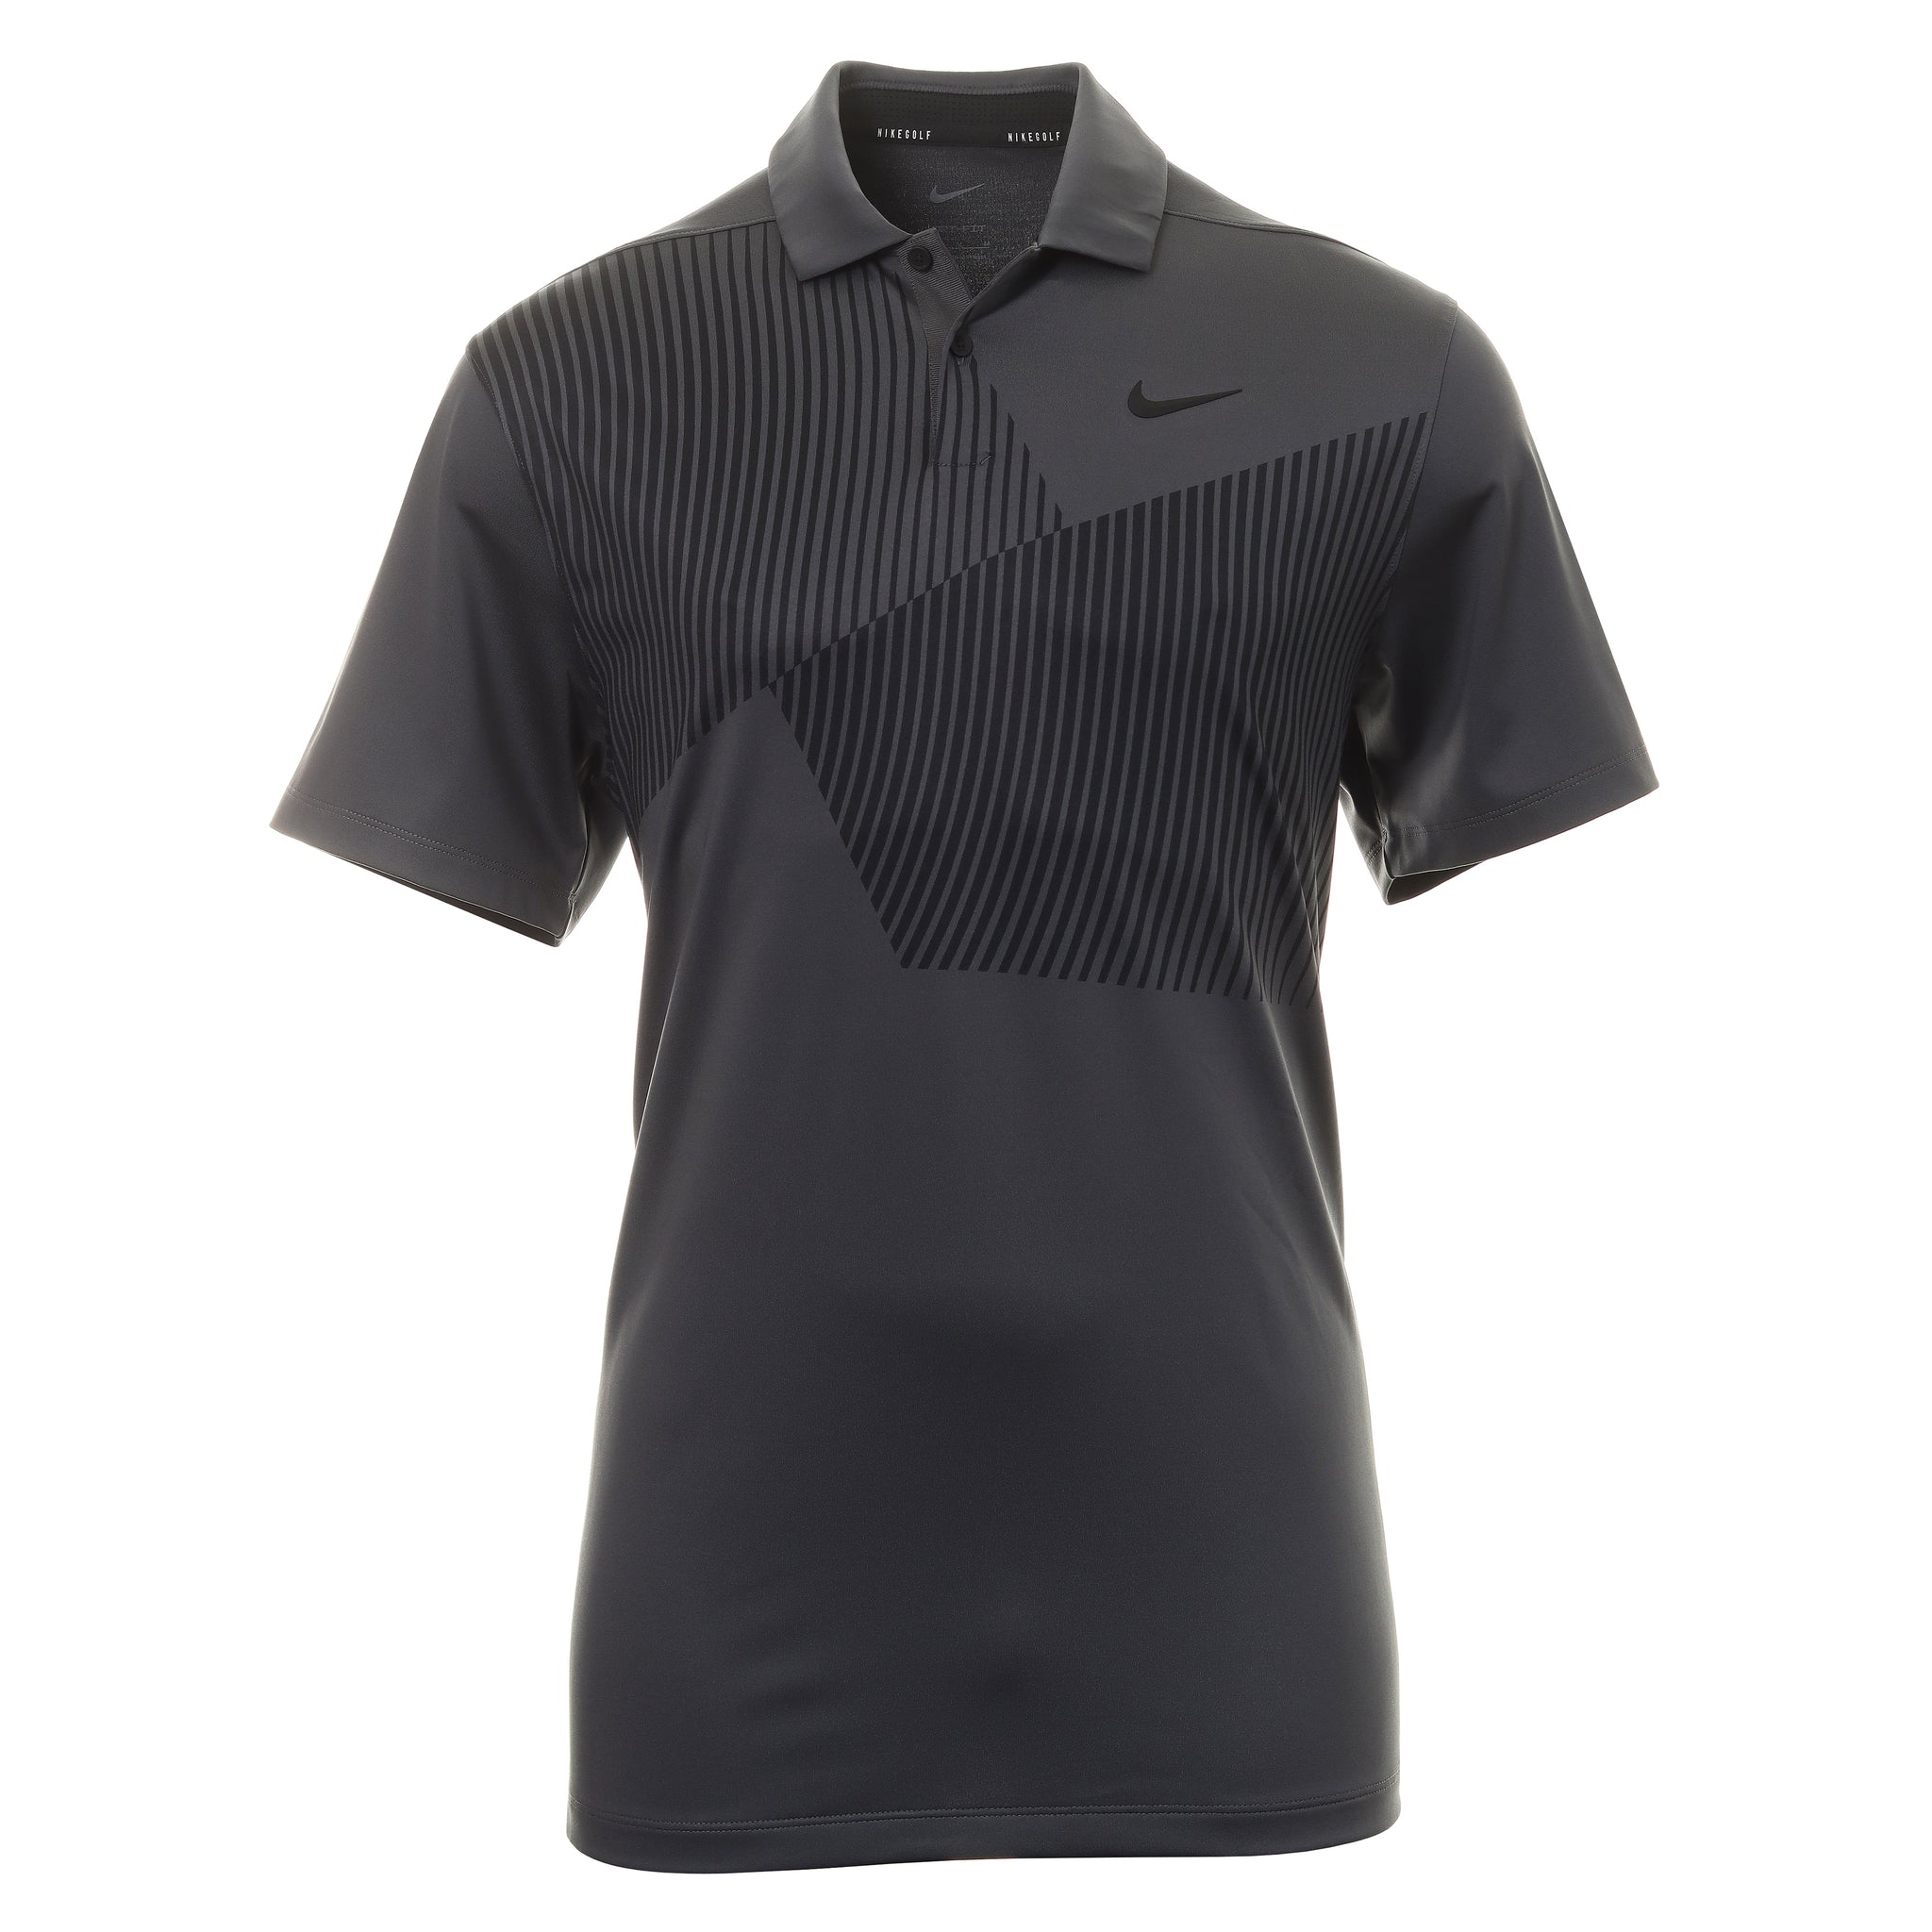 Nike Golf Dry Vapor Graphic Shirt